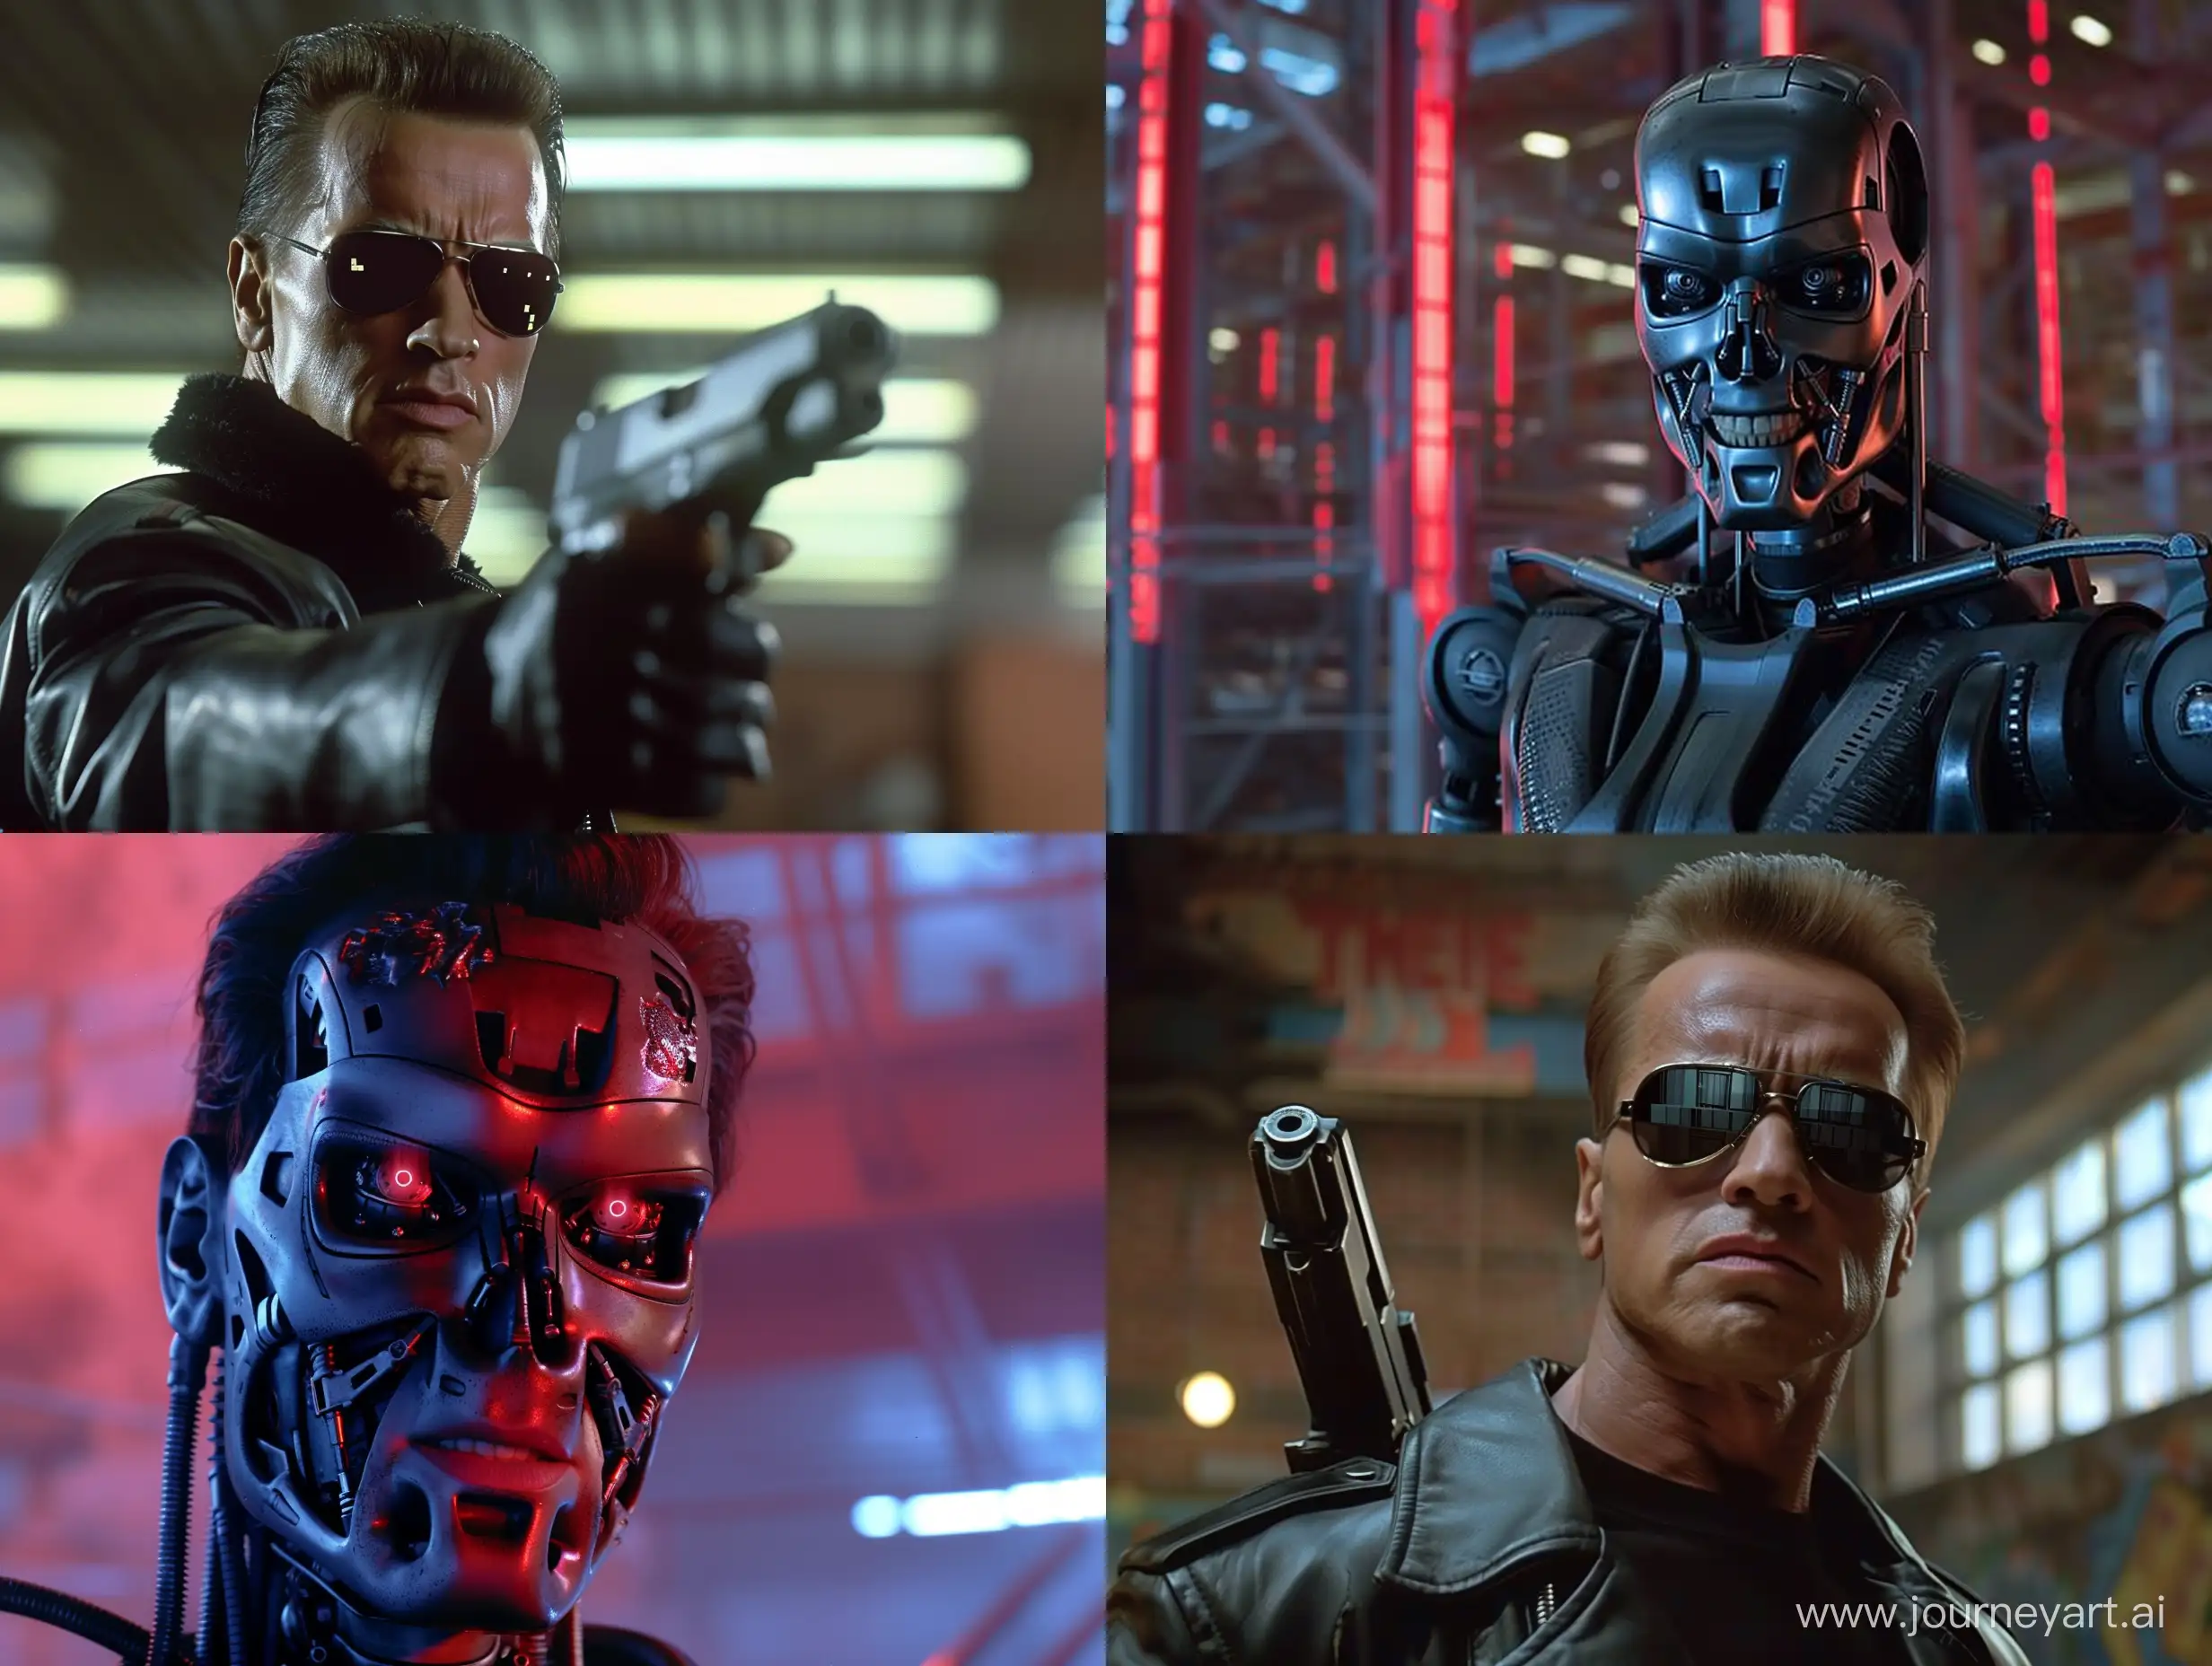 The Terminator, barcode glitch